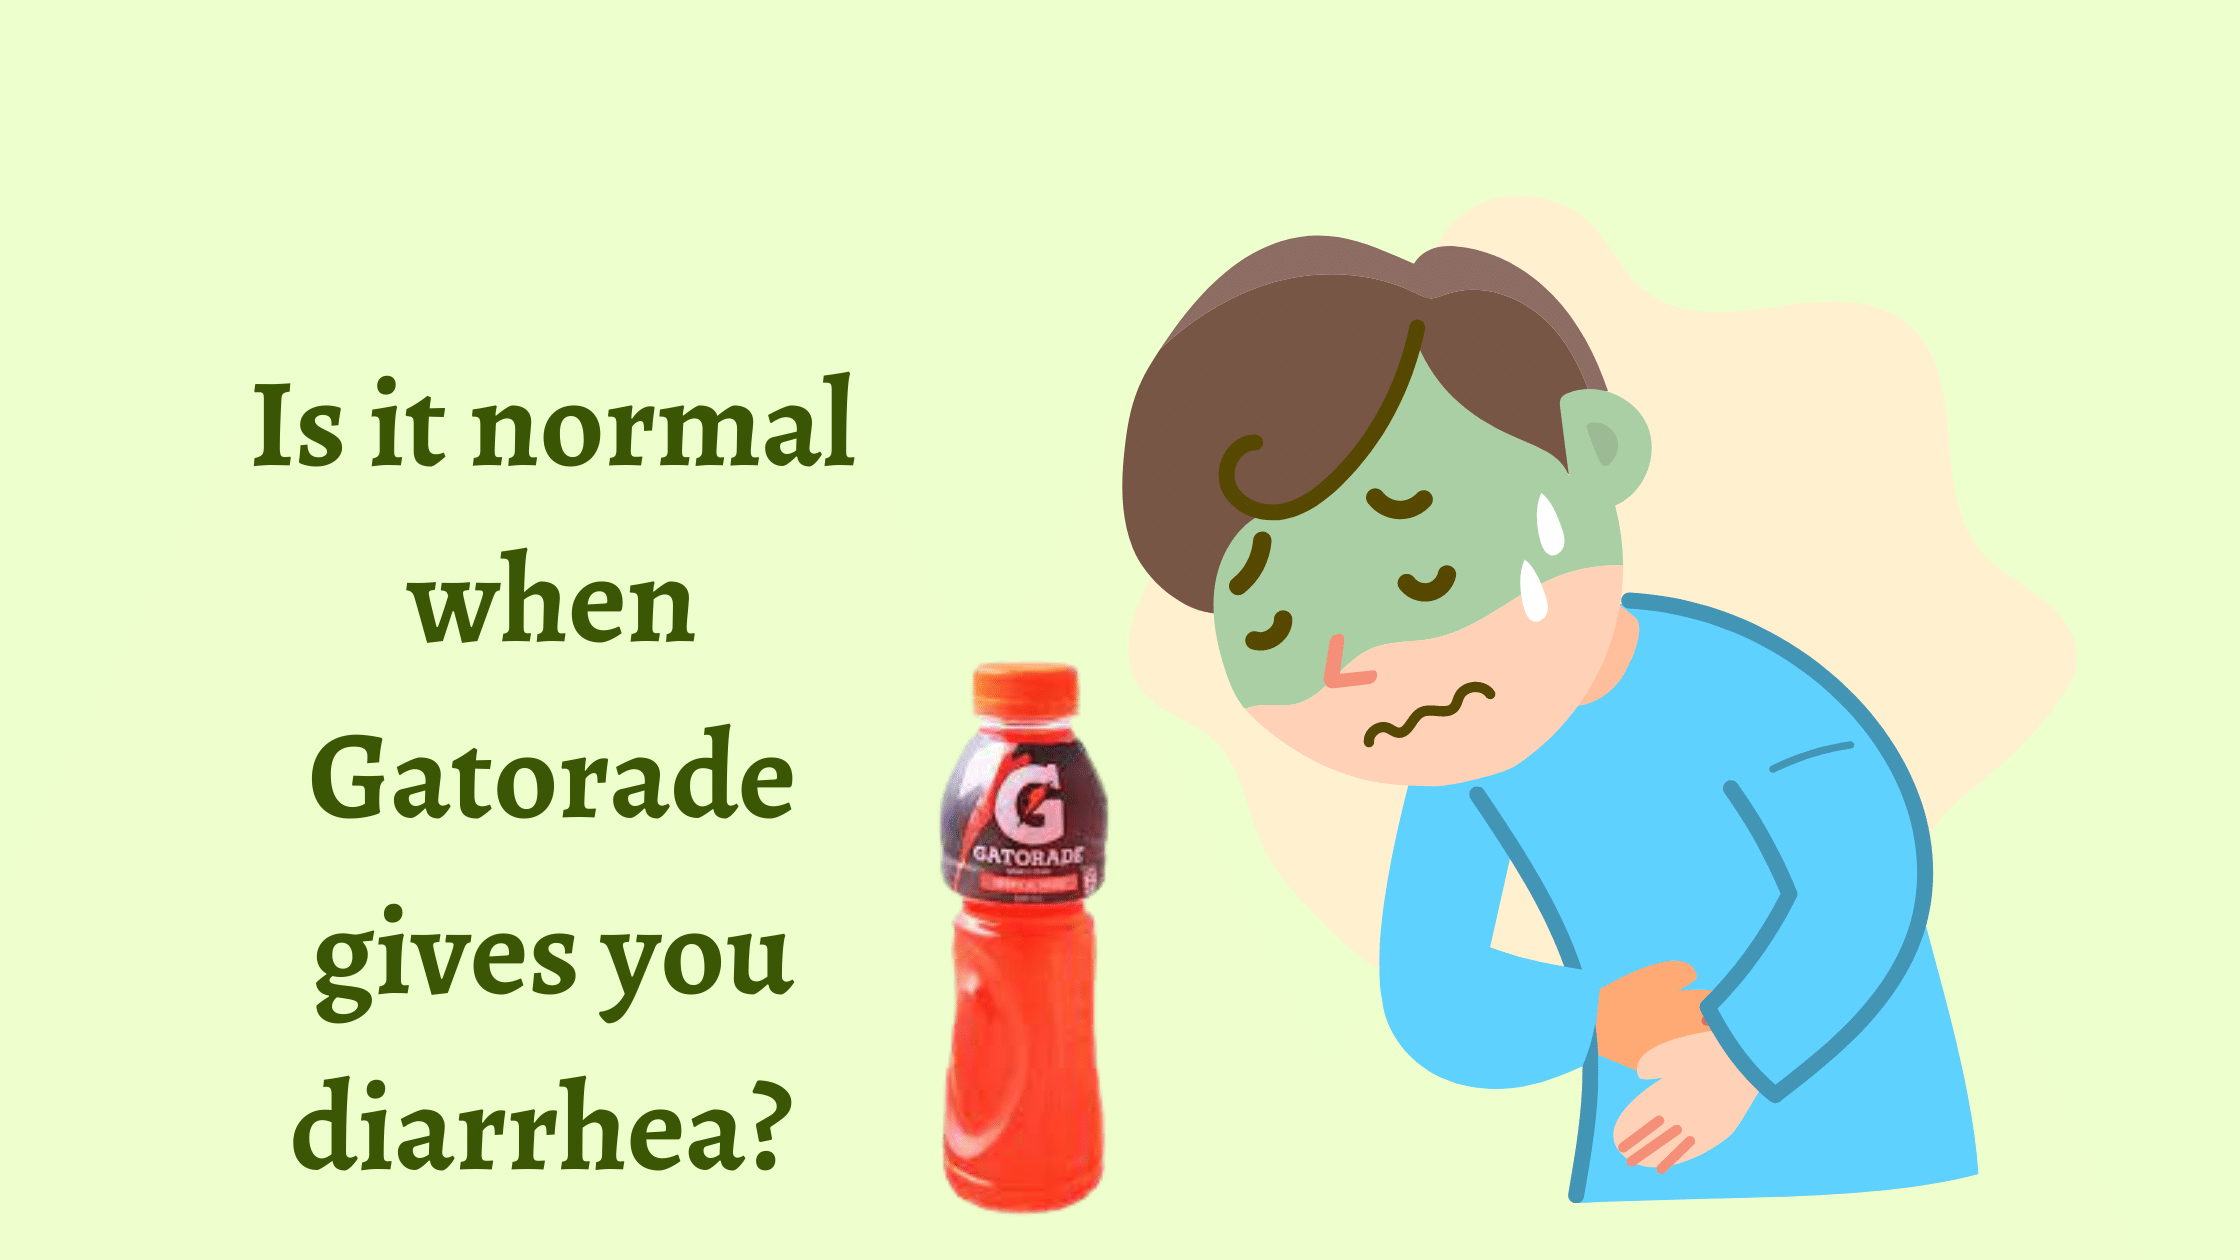 Can Gatorade gives you diarrhea